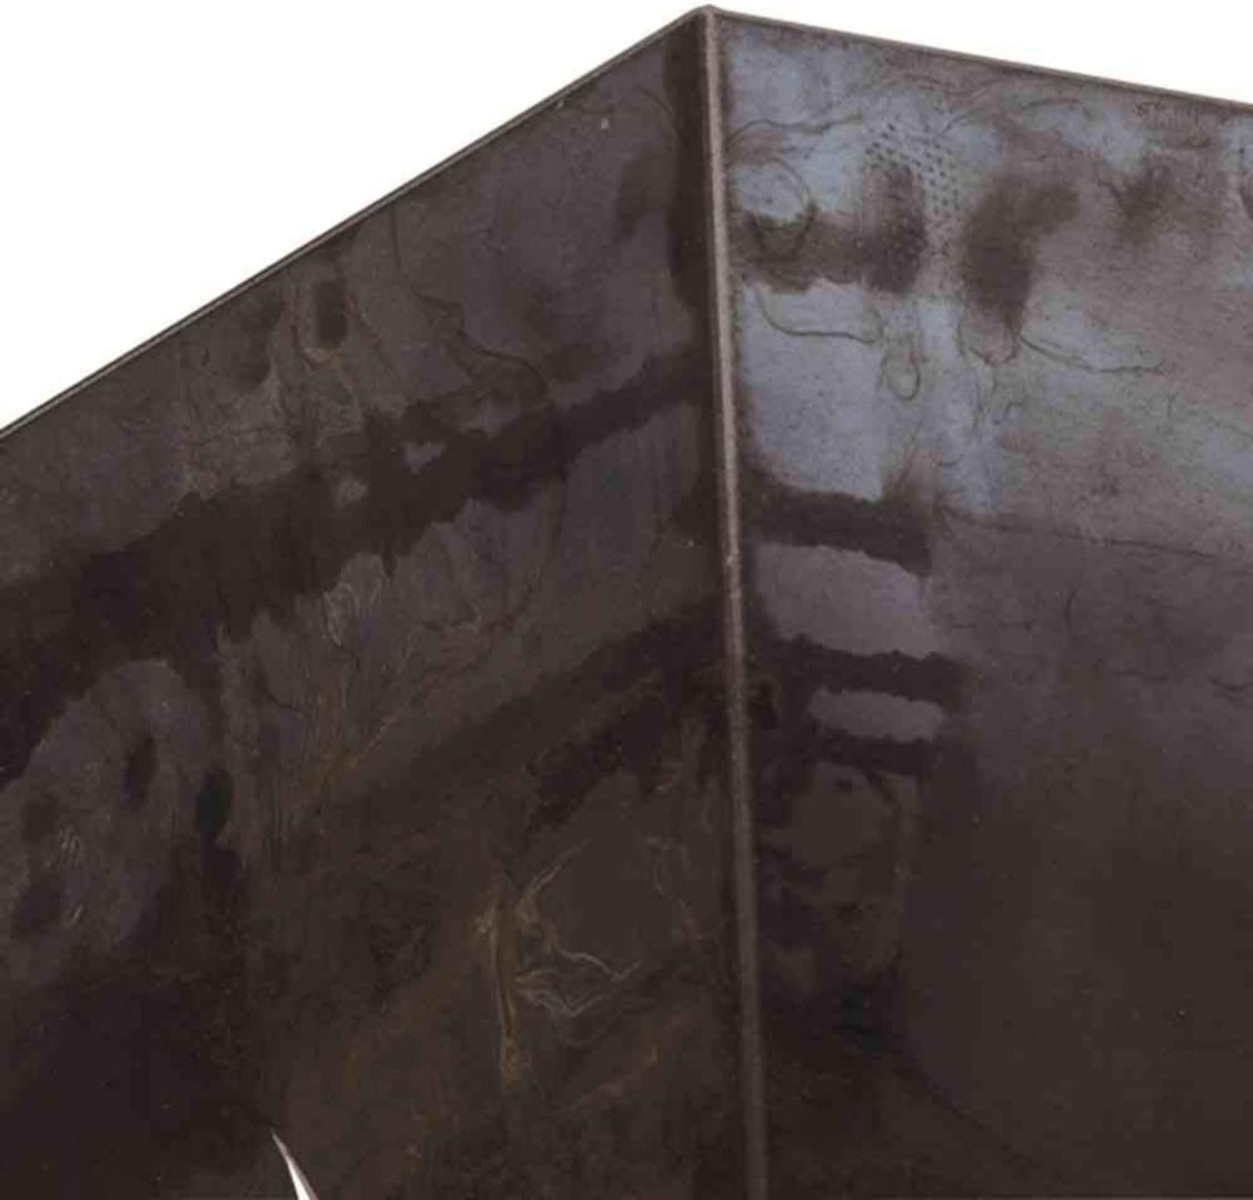 GOMAZING Feuerkorb aus Stahl Feuertonne, (anthrazit, 50x50x60cm) grau